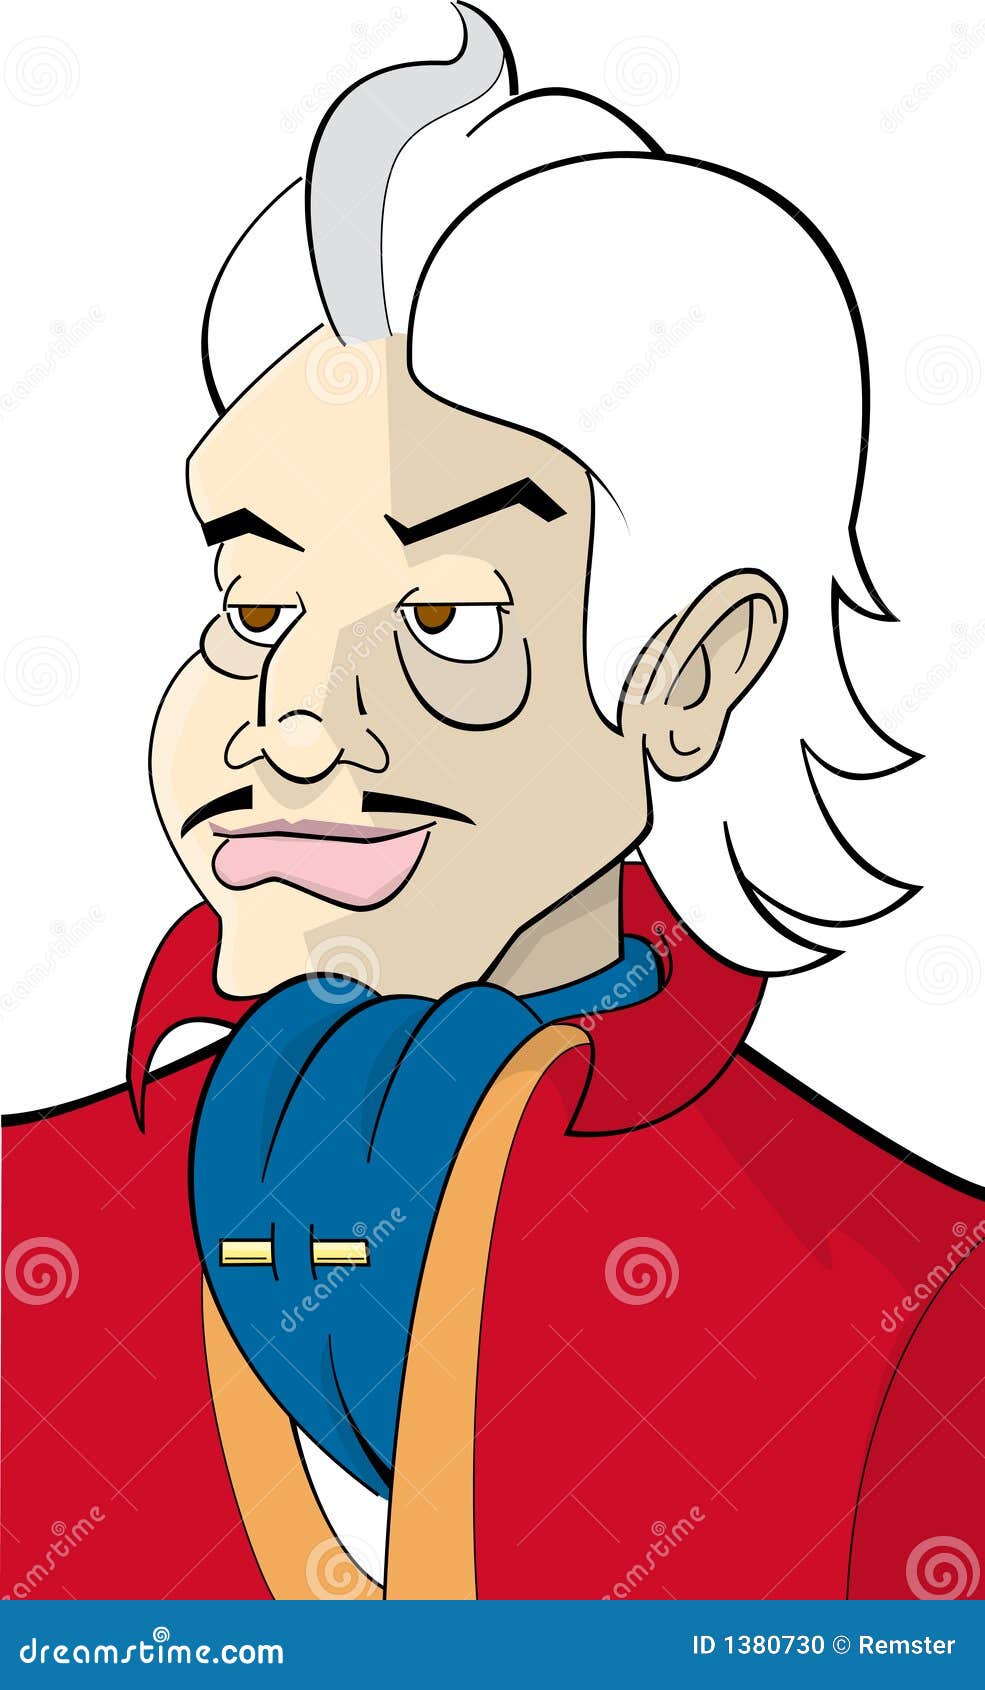 Cartoon Character Mafia-guy Stock Illustration - Illustration of